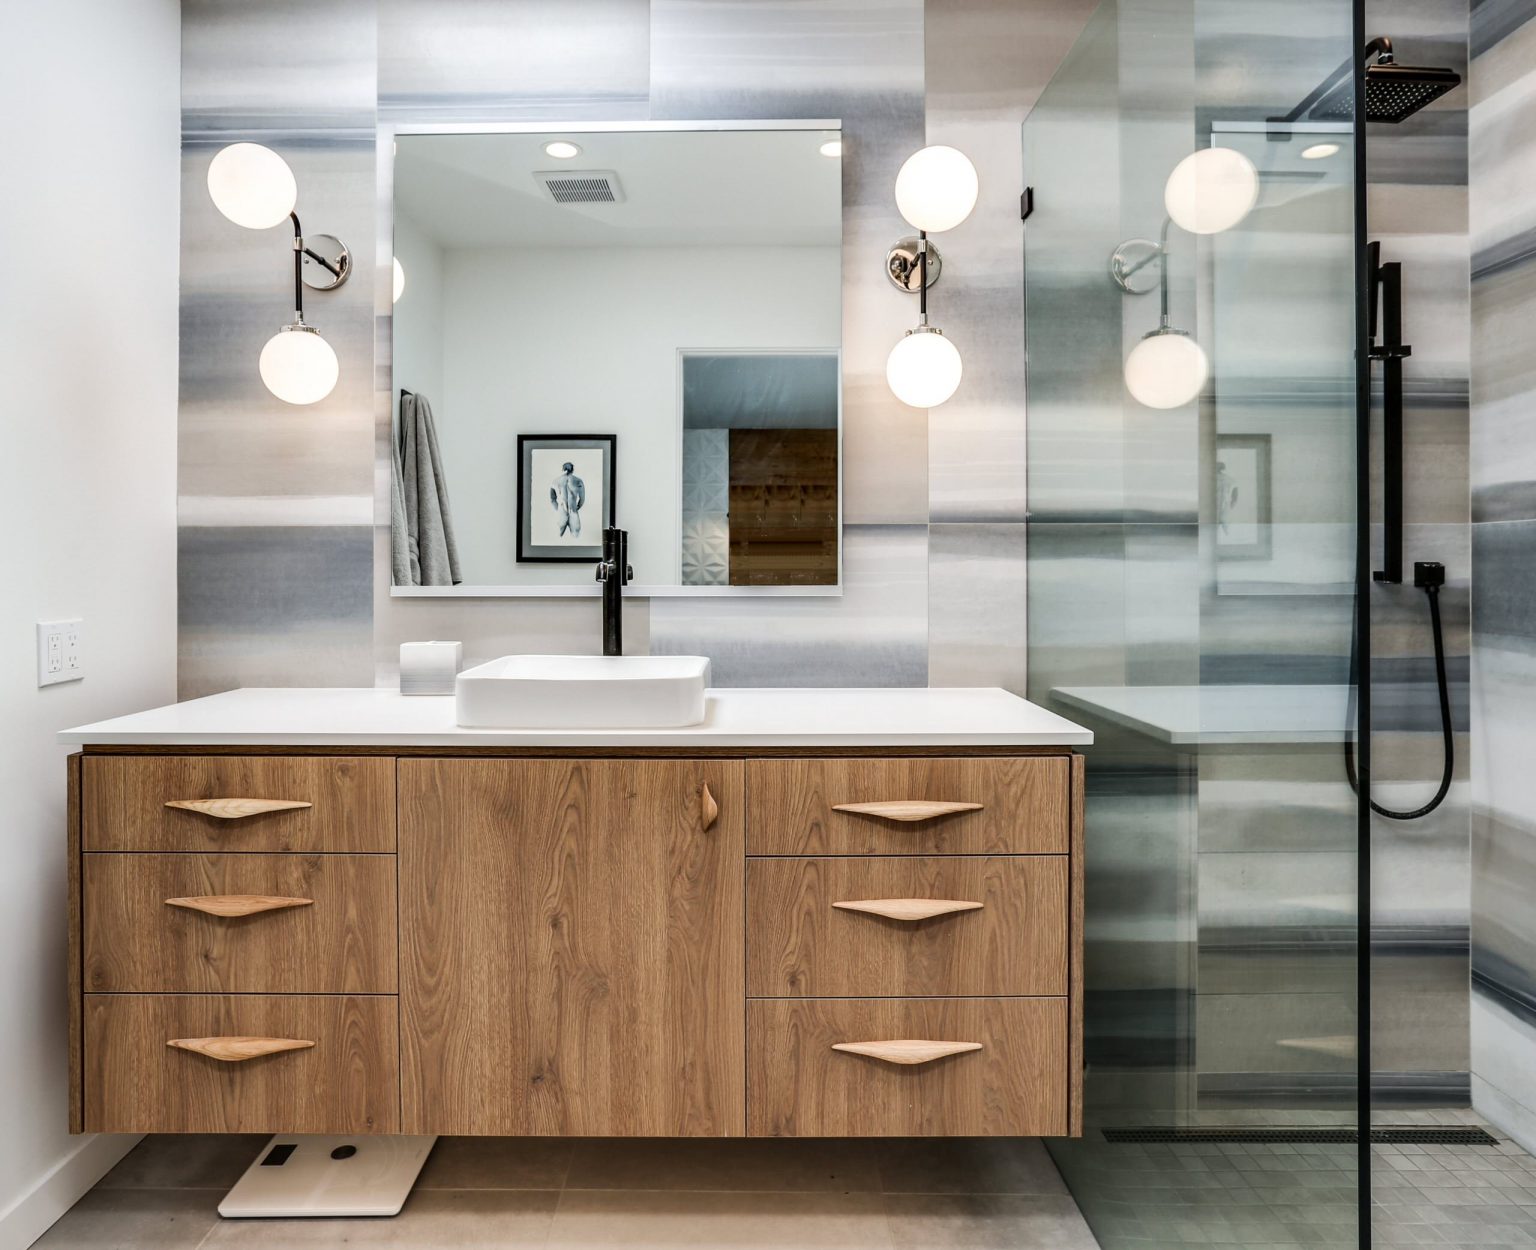 Modern Bathroom Ideas: 10 Contemporary Designs To Inspire